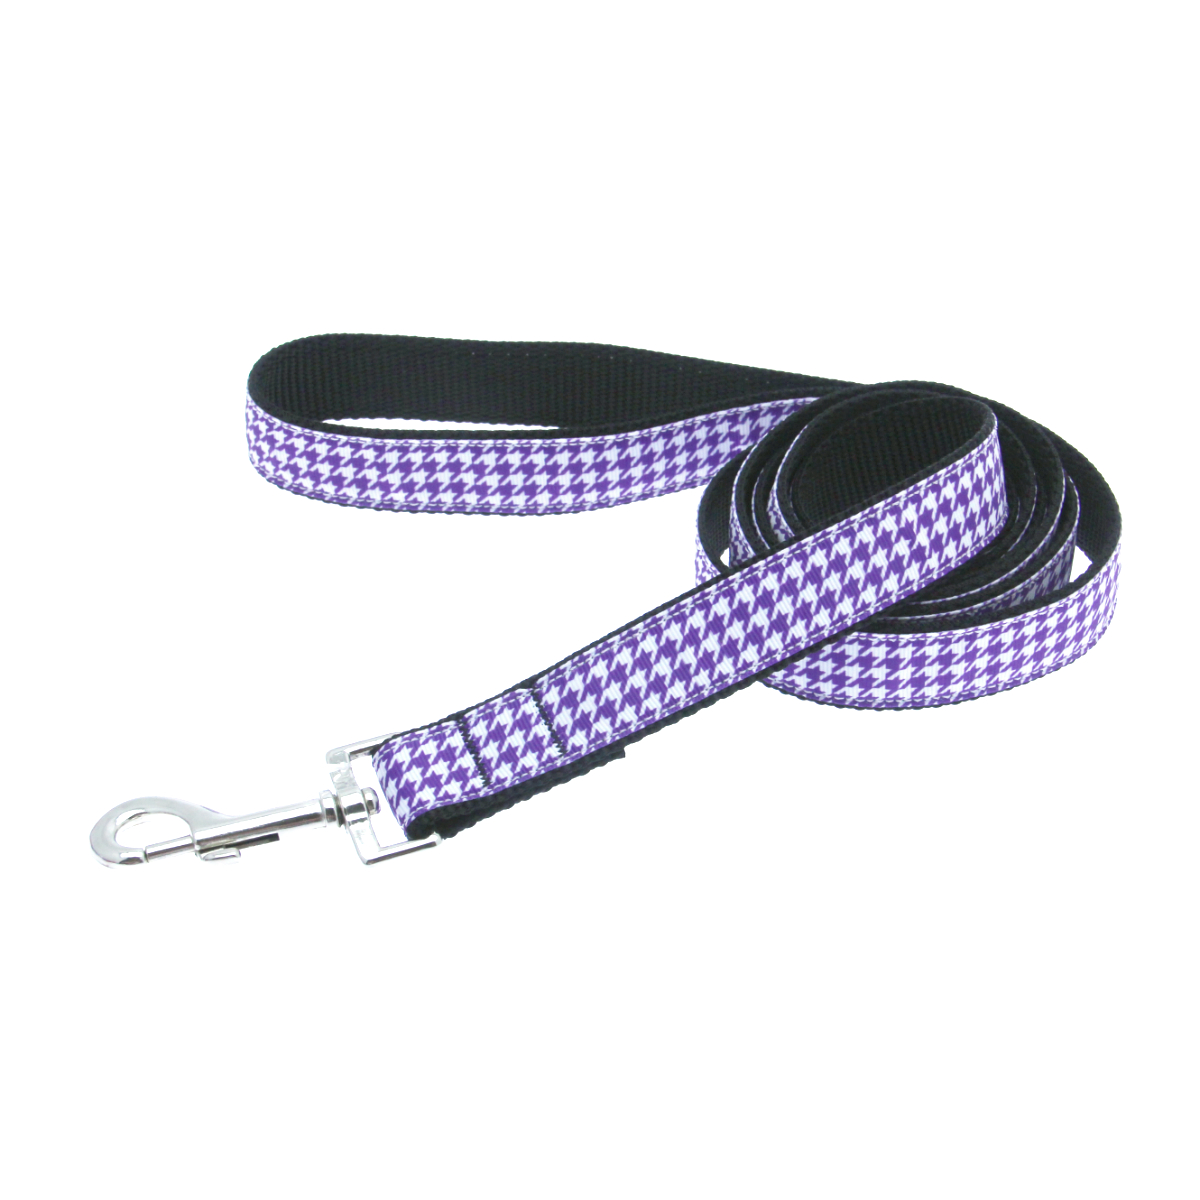 Houndstooth Nylon Dog Leash - Purple